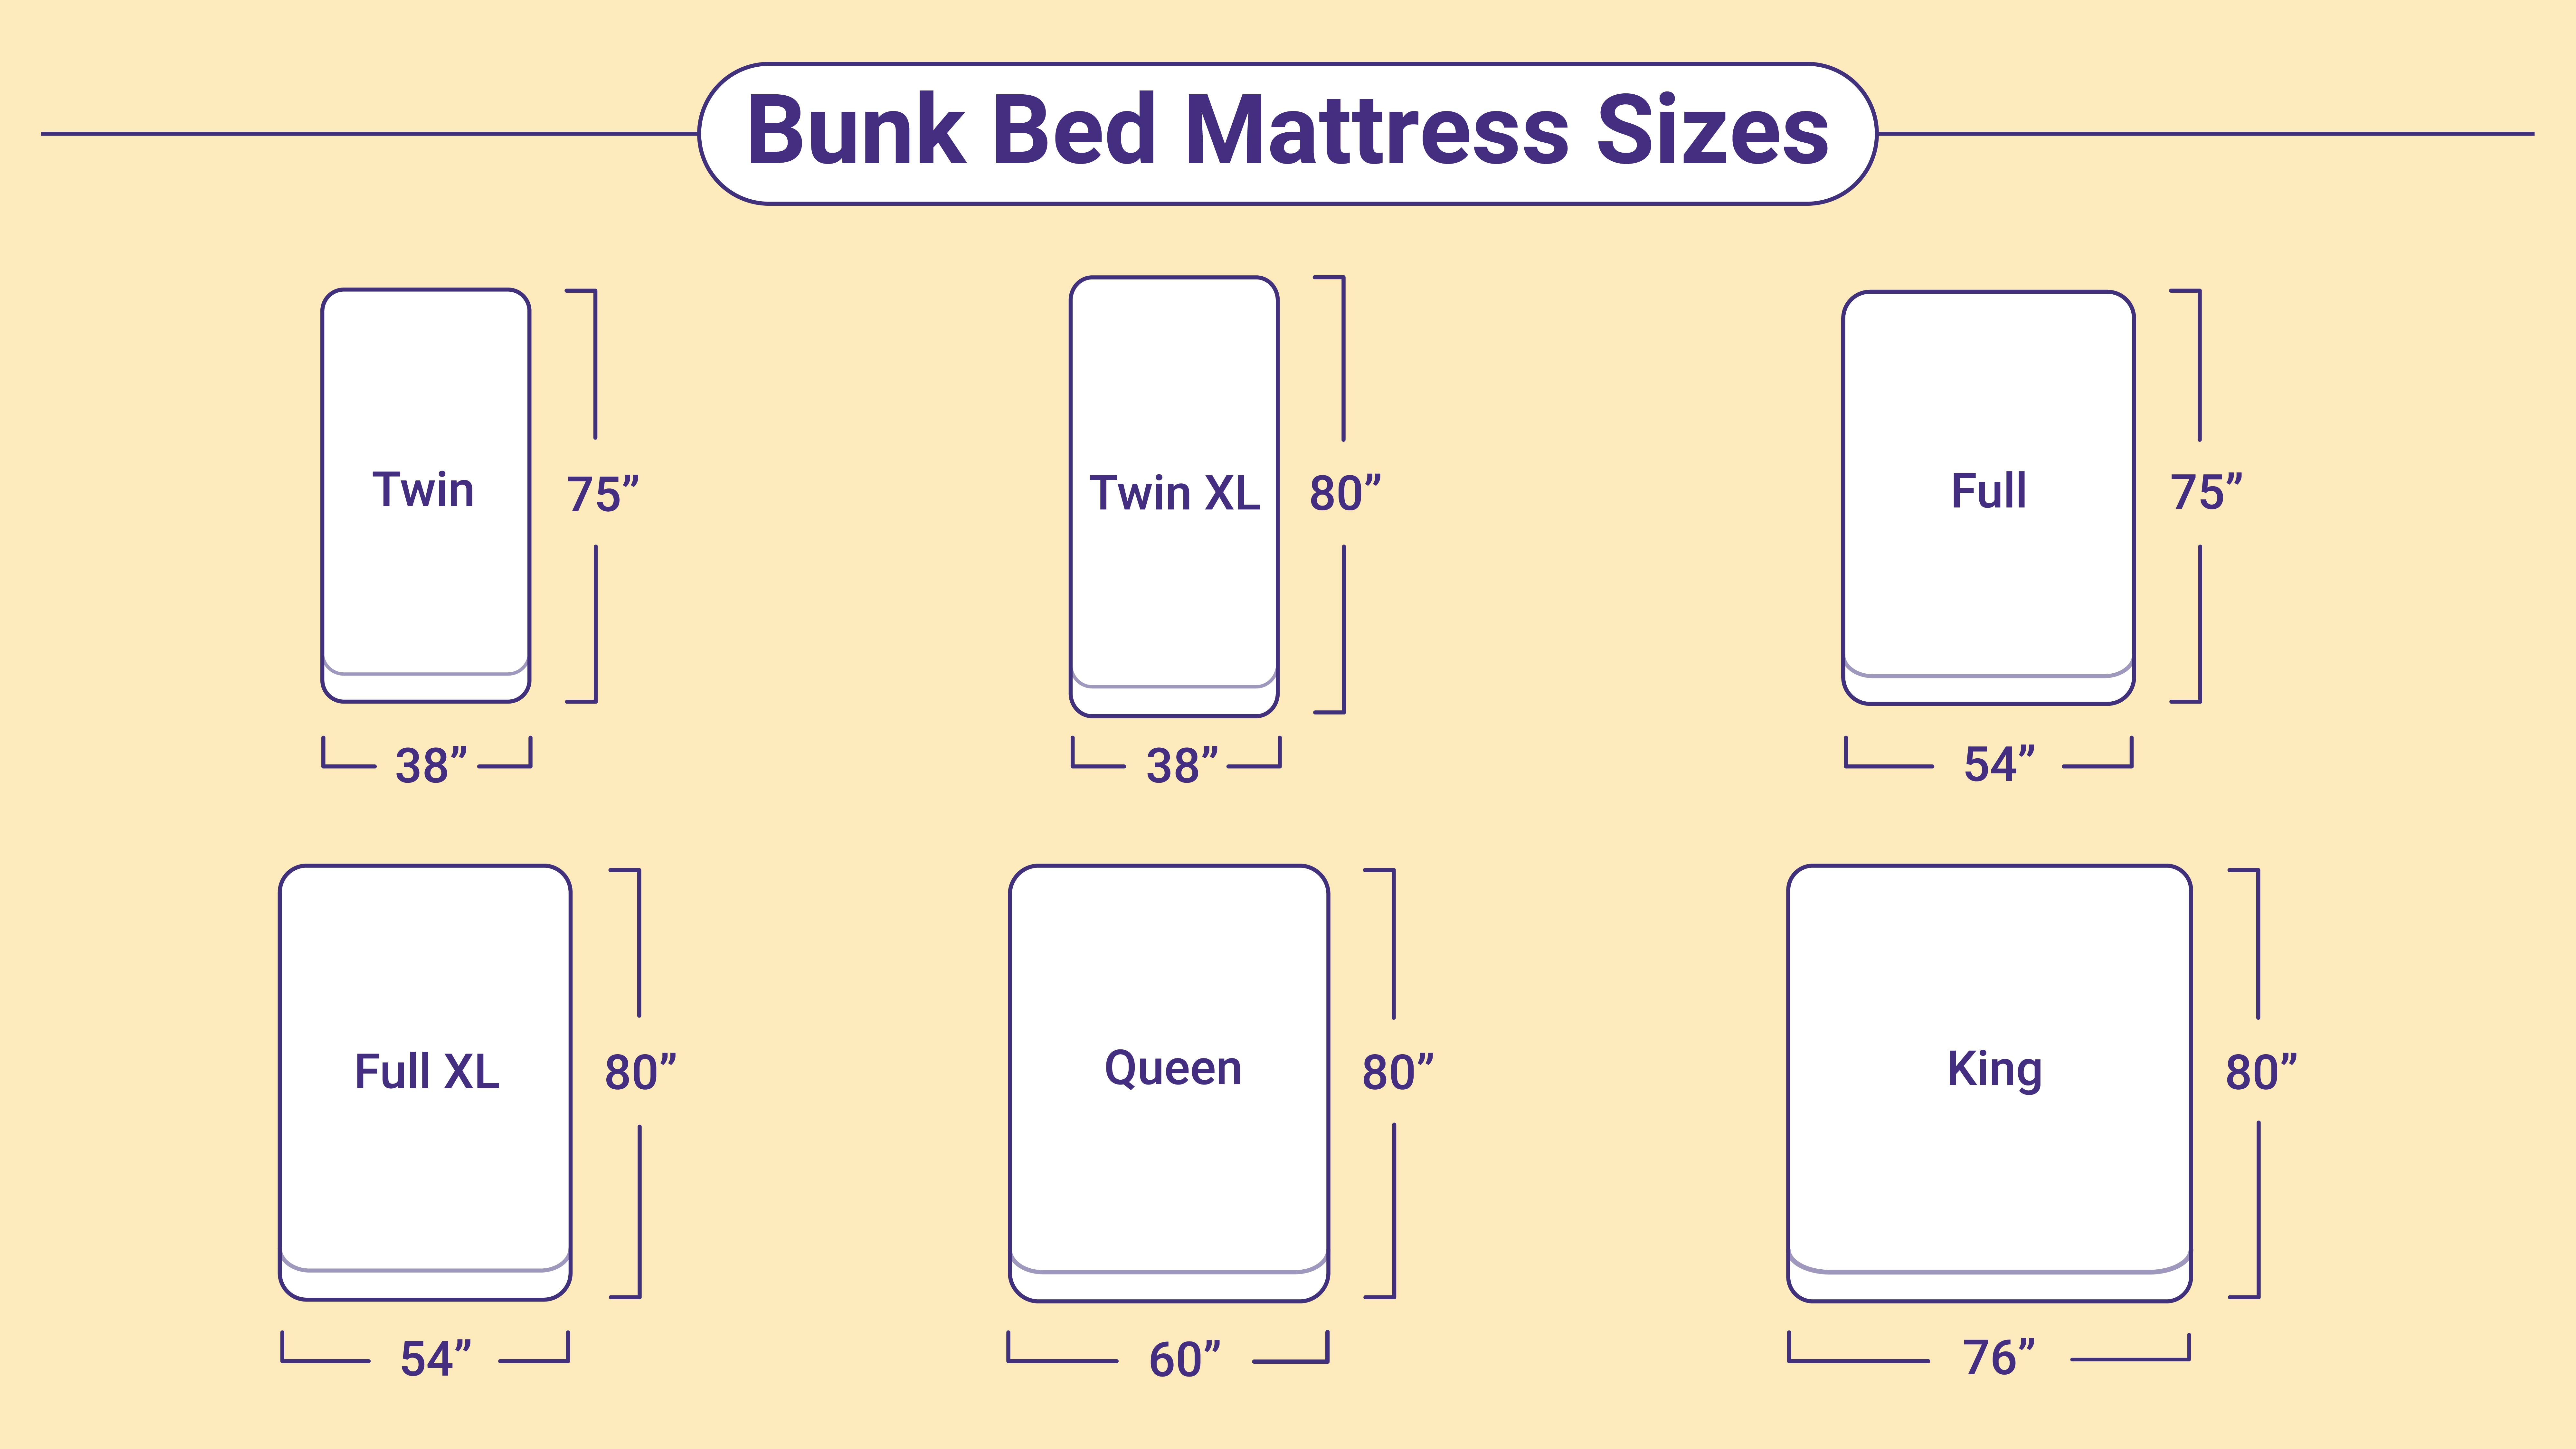 sleep live mattress series 200 size full